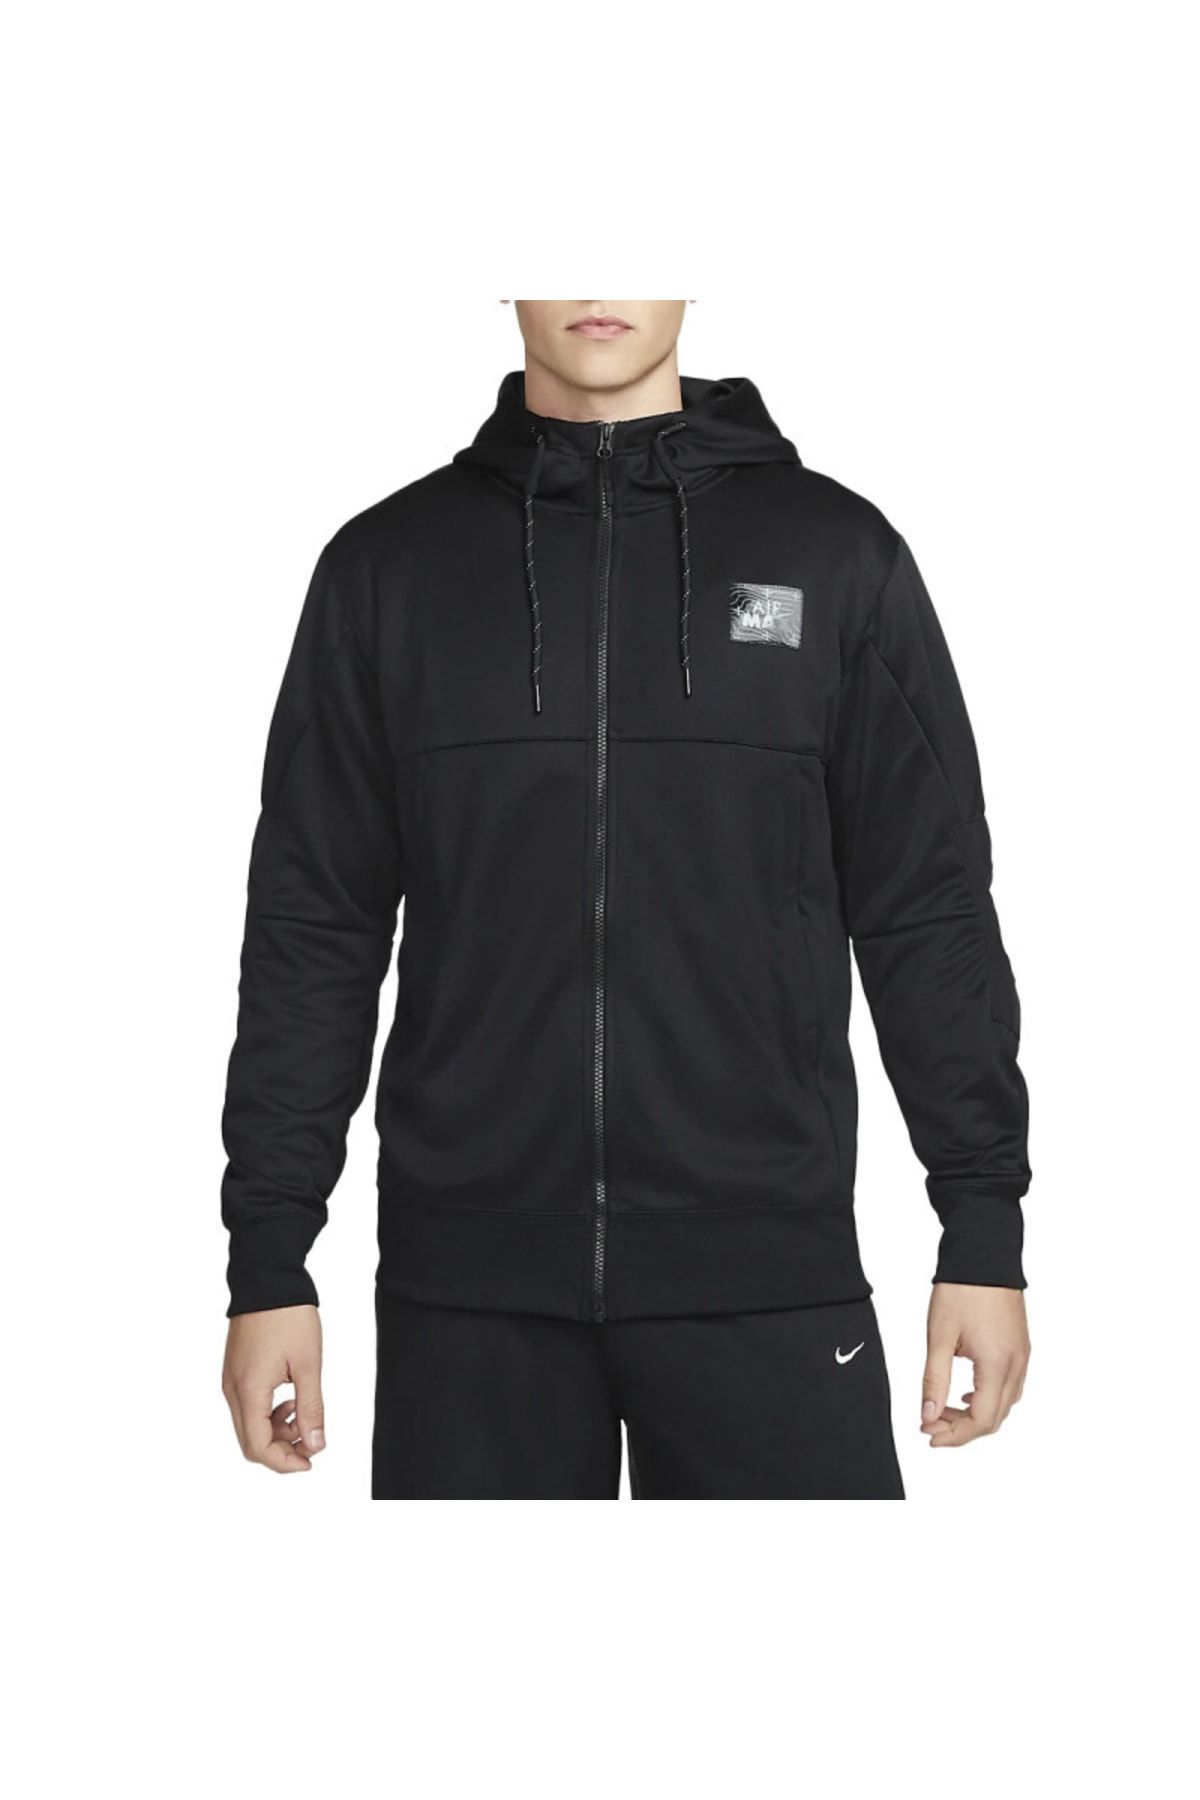 Nike Sportswear Air Max Men's Full-zip Hoodie - Black Do7234-010